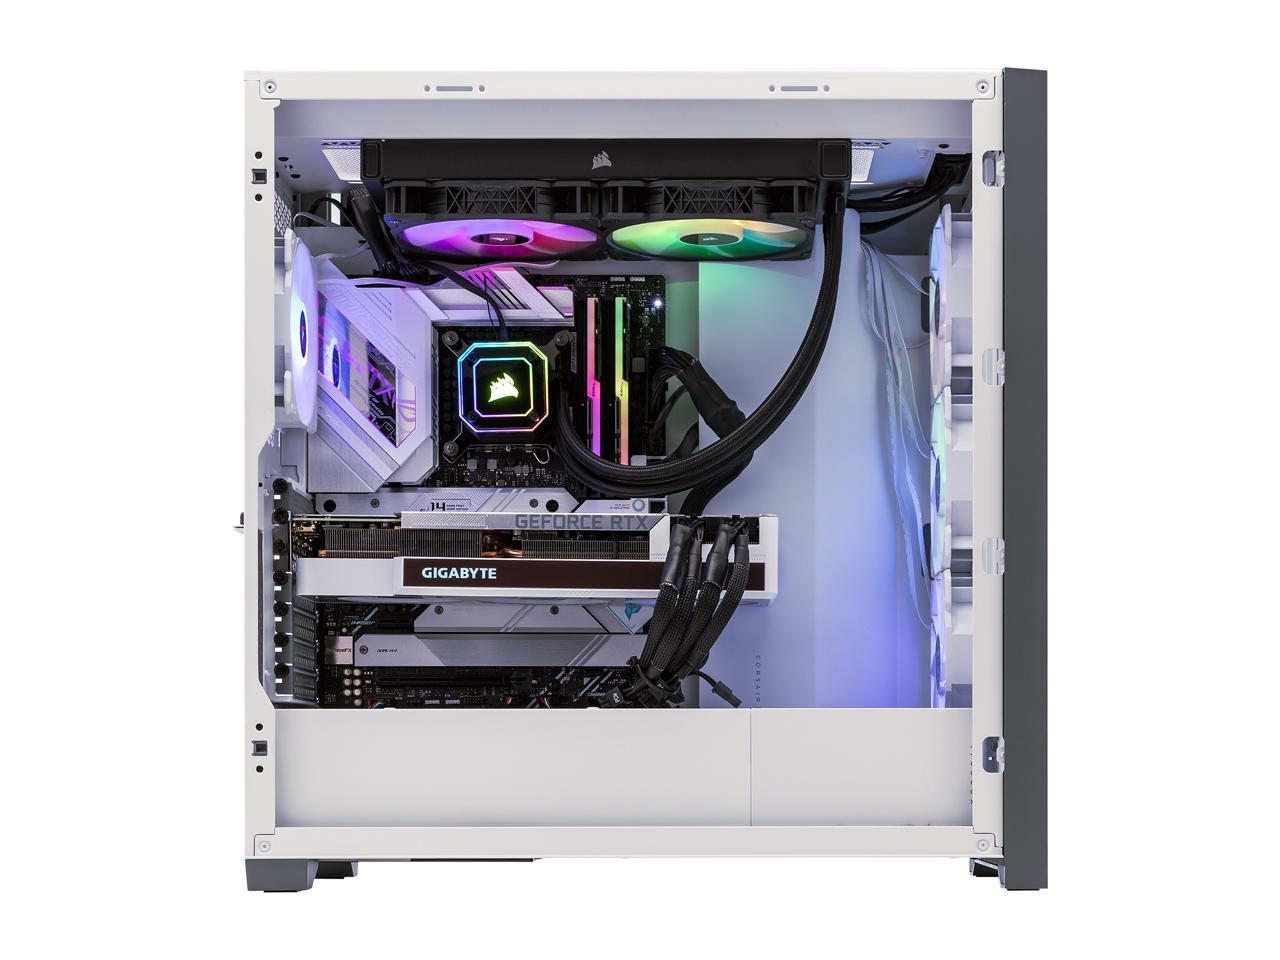 ABS Gladiator Gaming PC - Intel i9 12900KF - GeForce RTX 3080 - G.Skill TridentZ RGB 32GB (2x16GB) DDR4 3200MHz - 1TB M.2 NVMe SSD - Corsair iCue 5000x Gaming Case